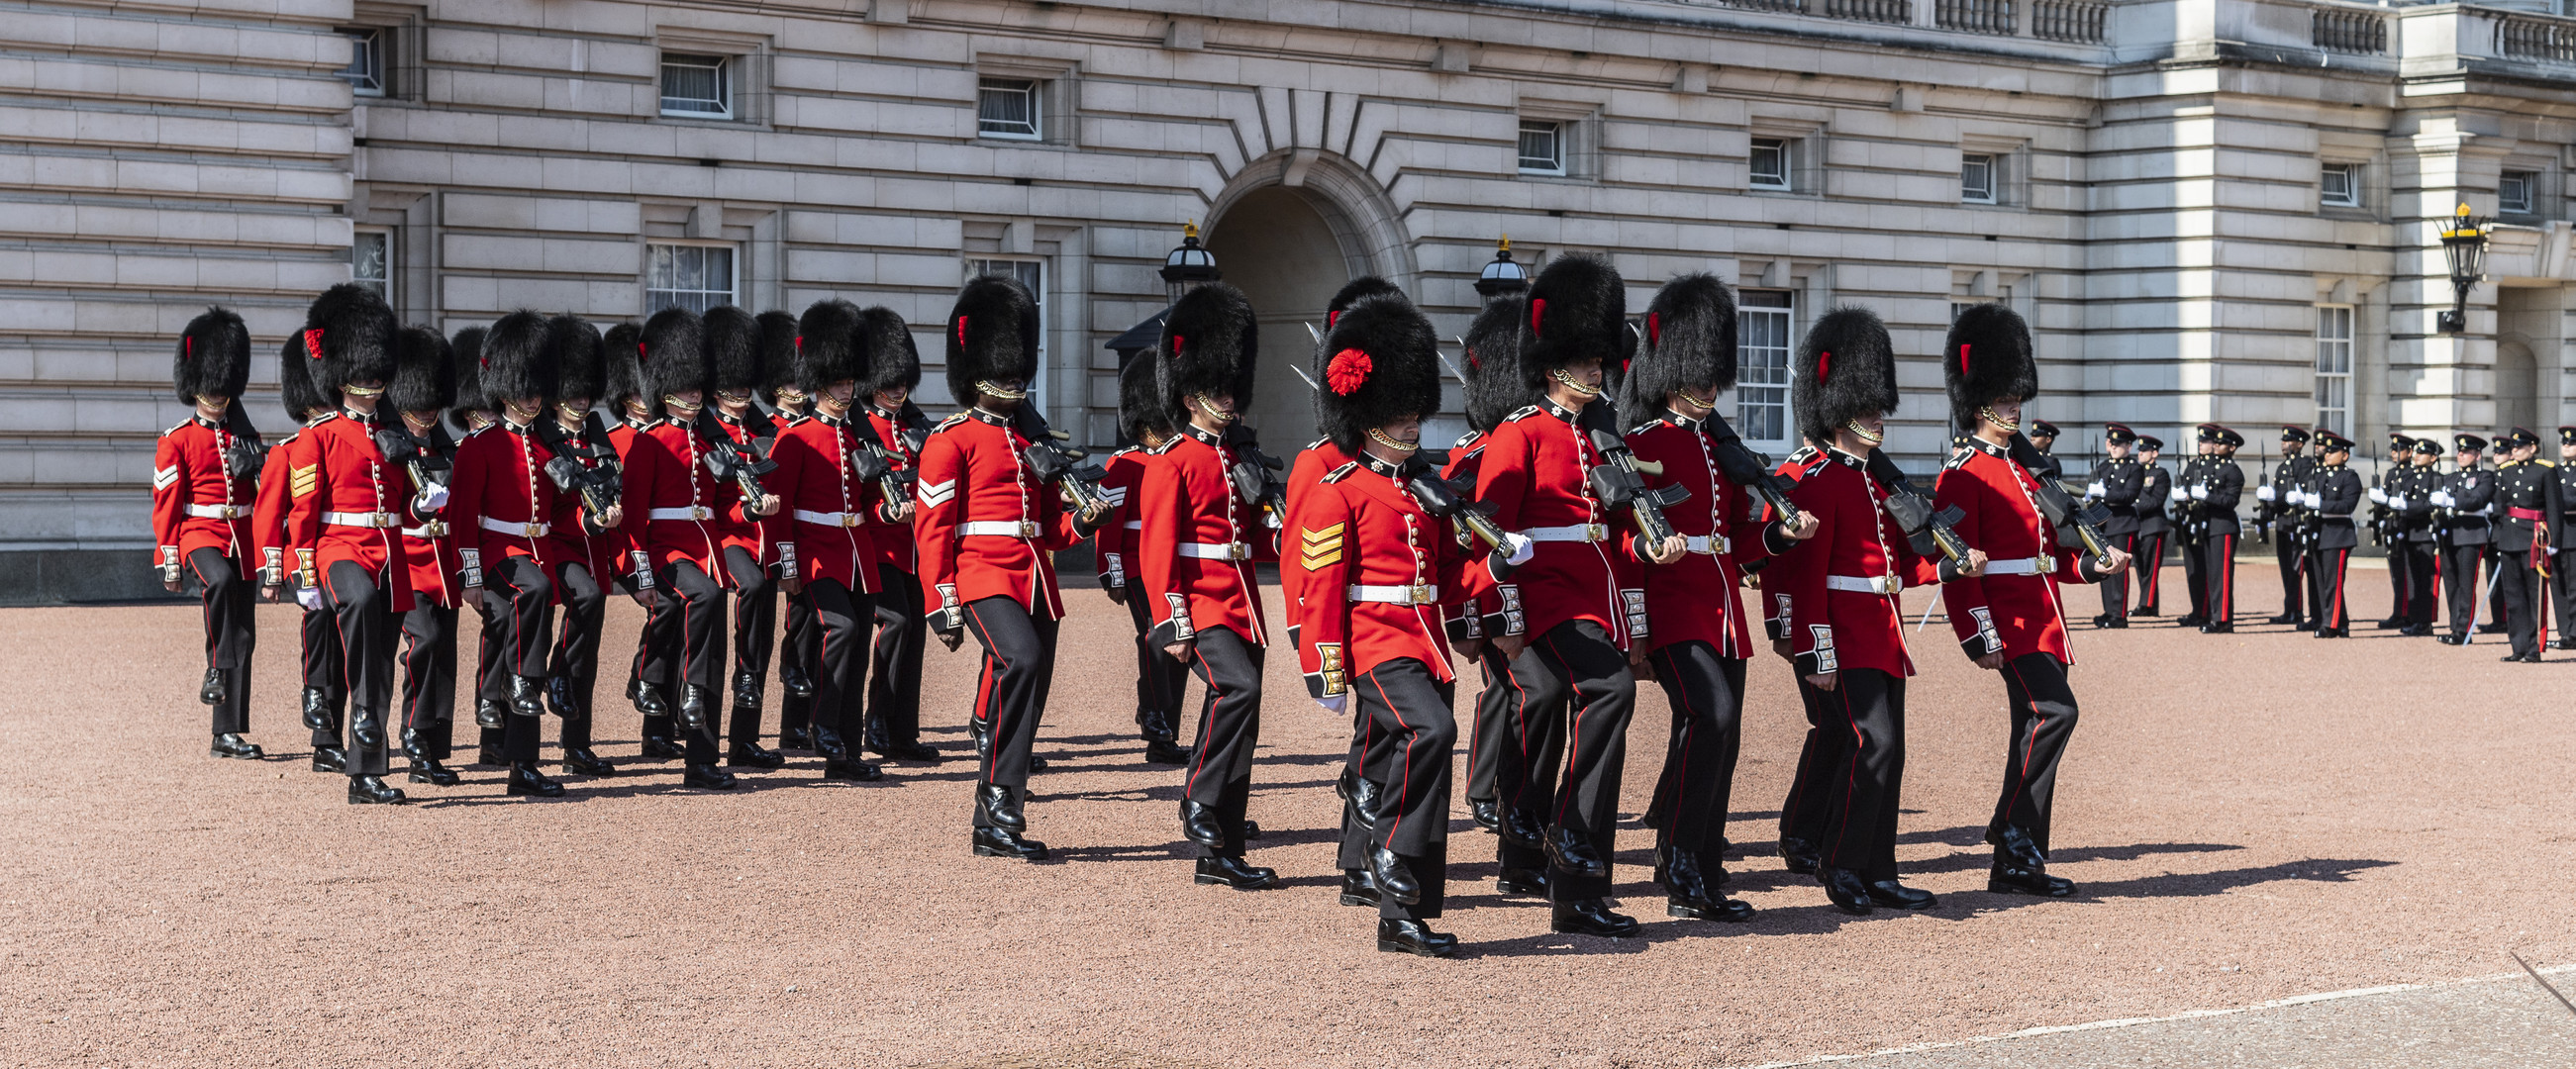 London, Buckingham Palace, Changing the Guard III